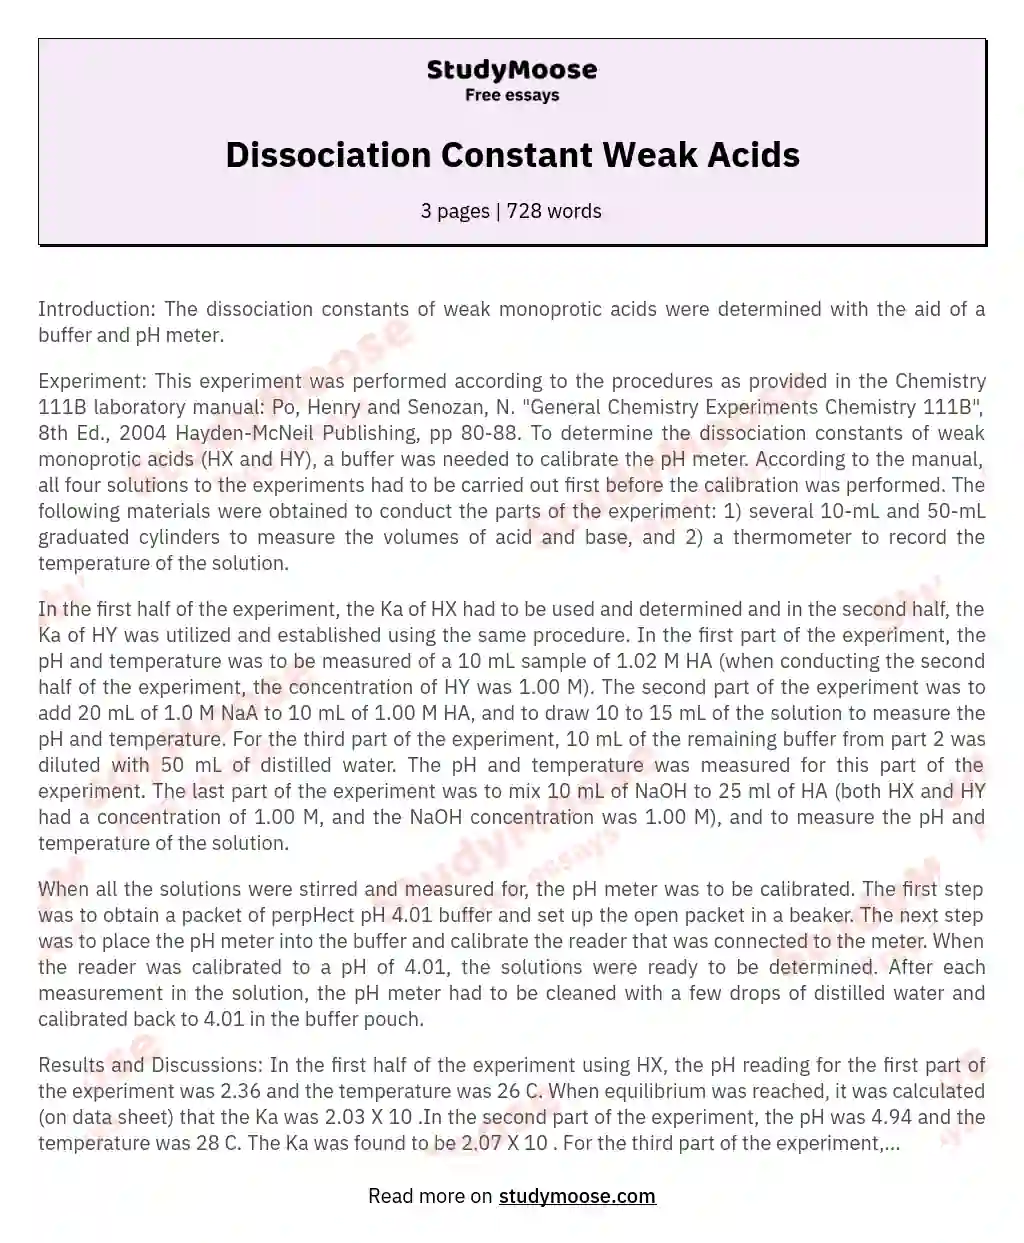 Dissociation Constant Weak Acids essay